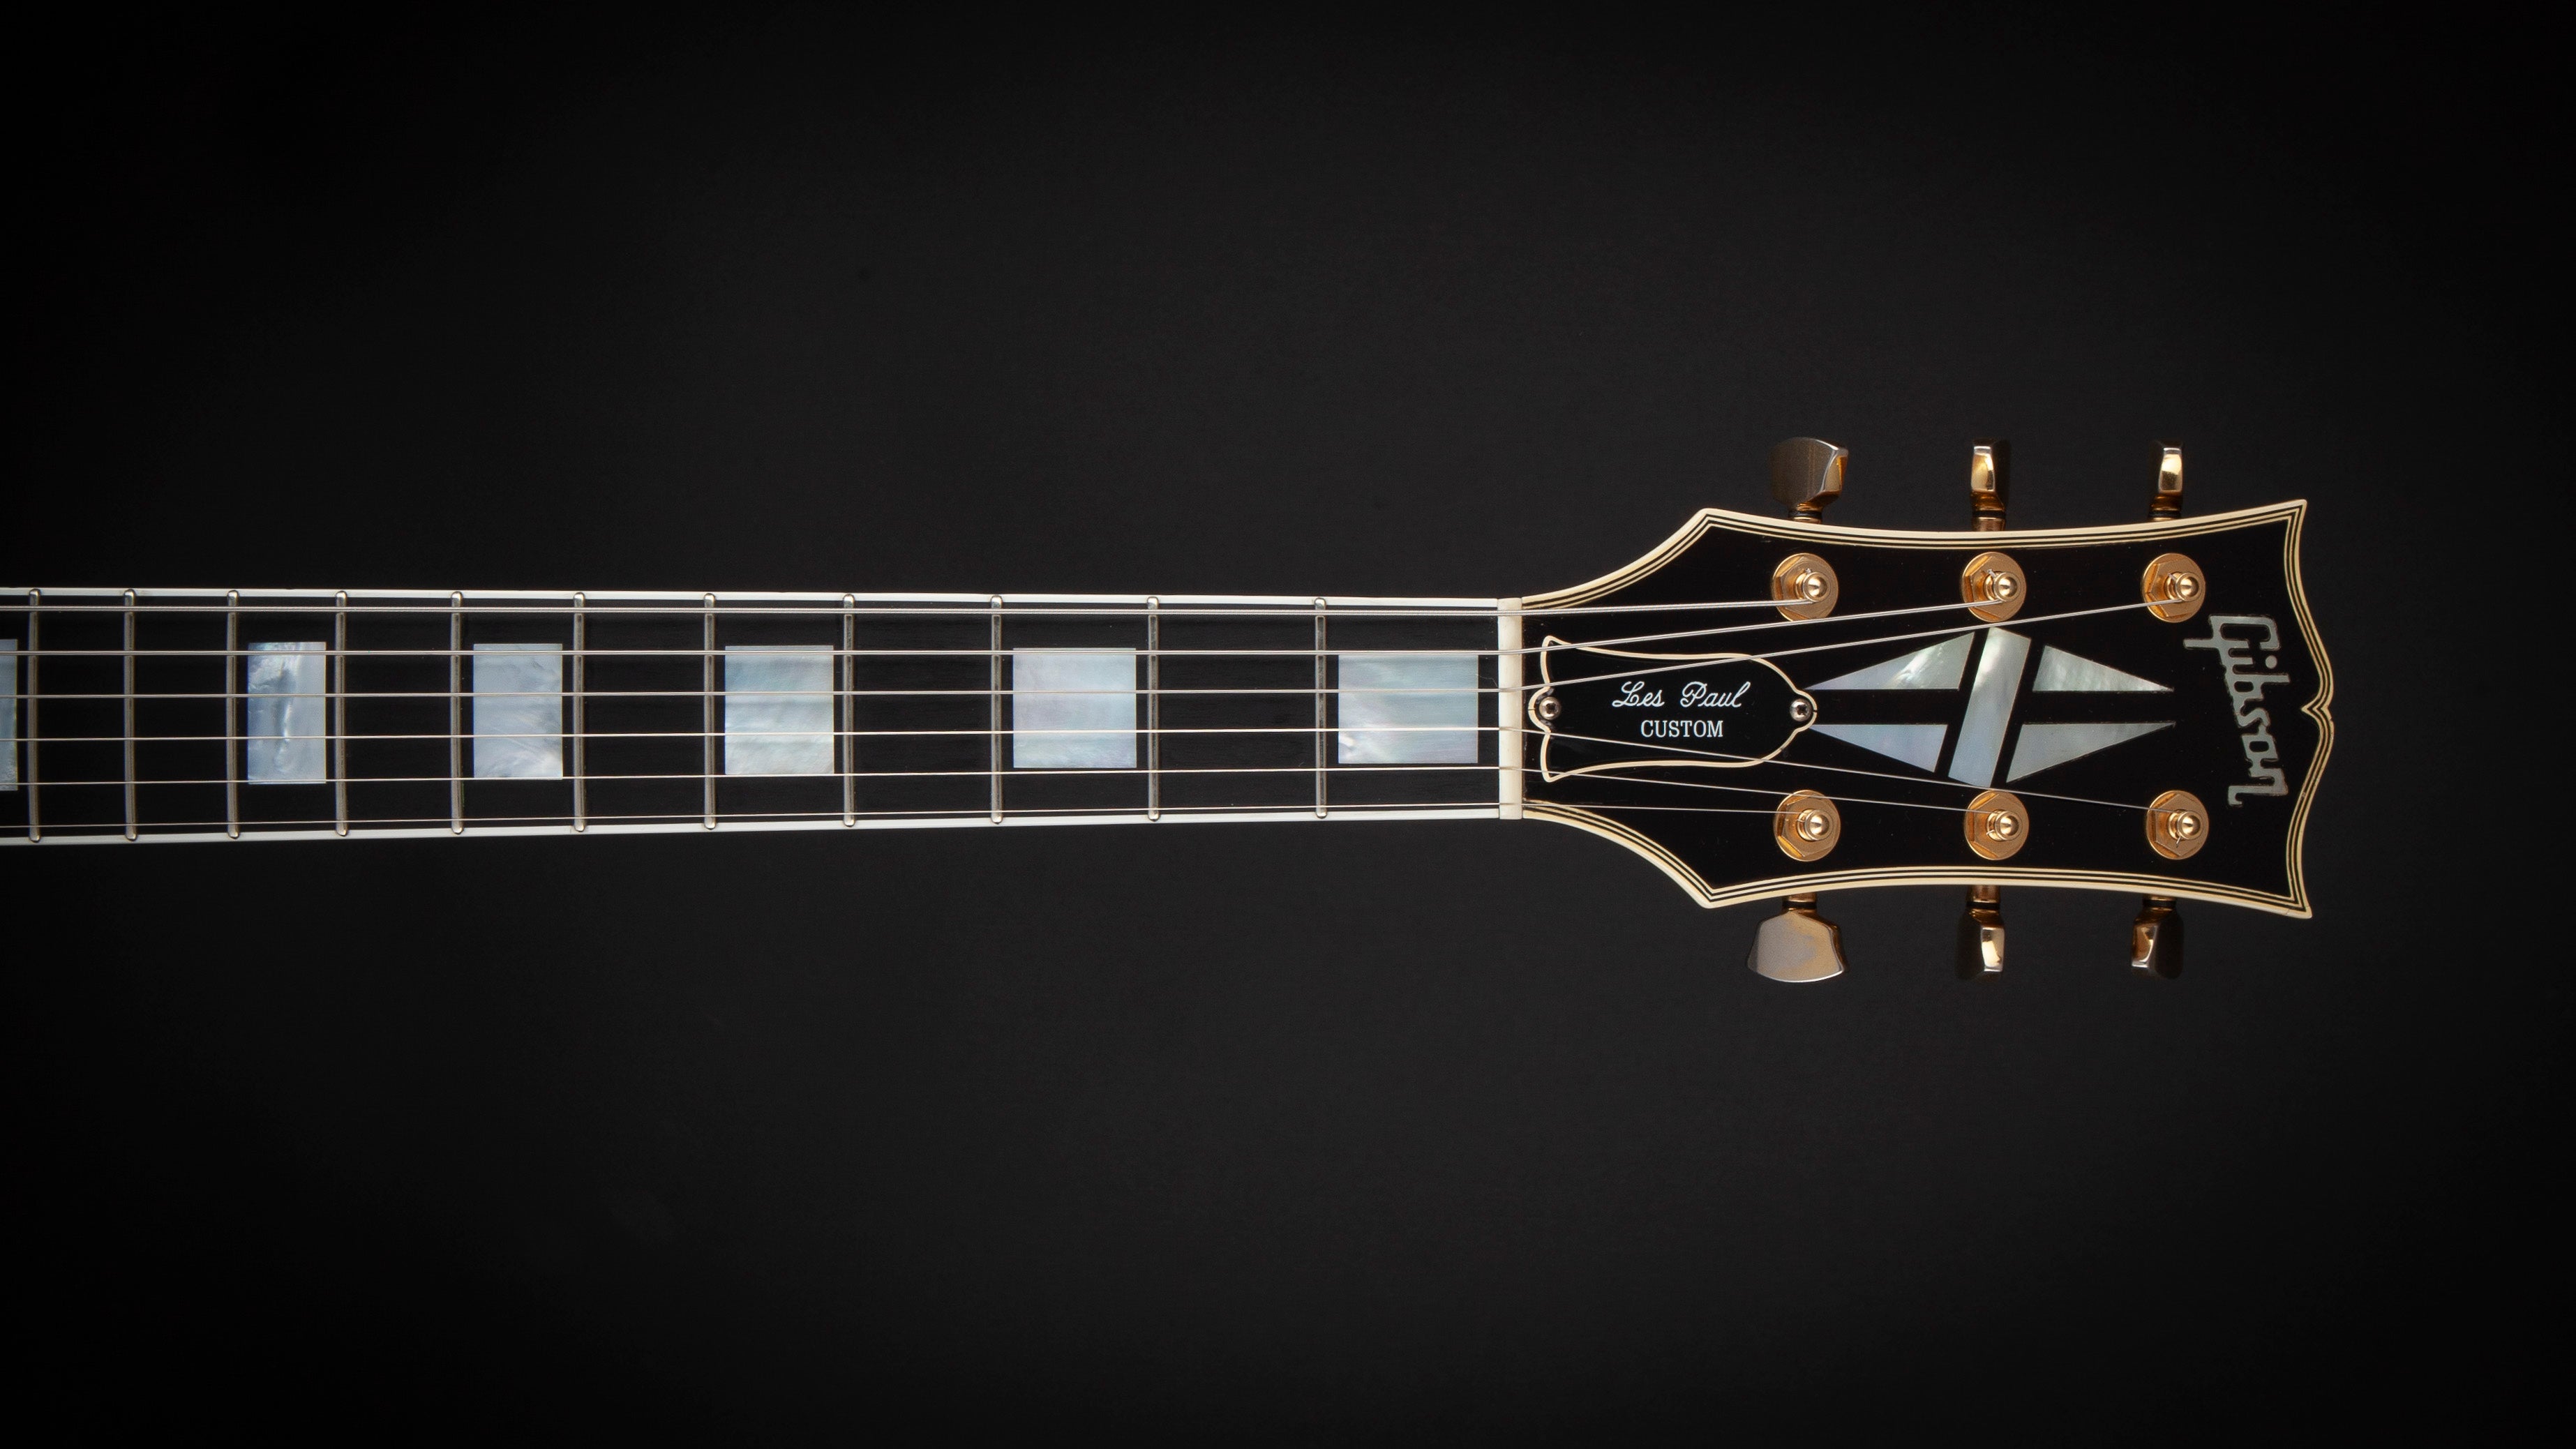 Gibson Guitars: 1989 Les Paul Custom Tobacco Sunburst #80279577